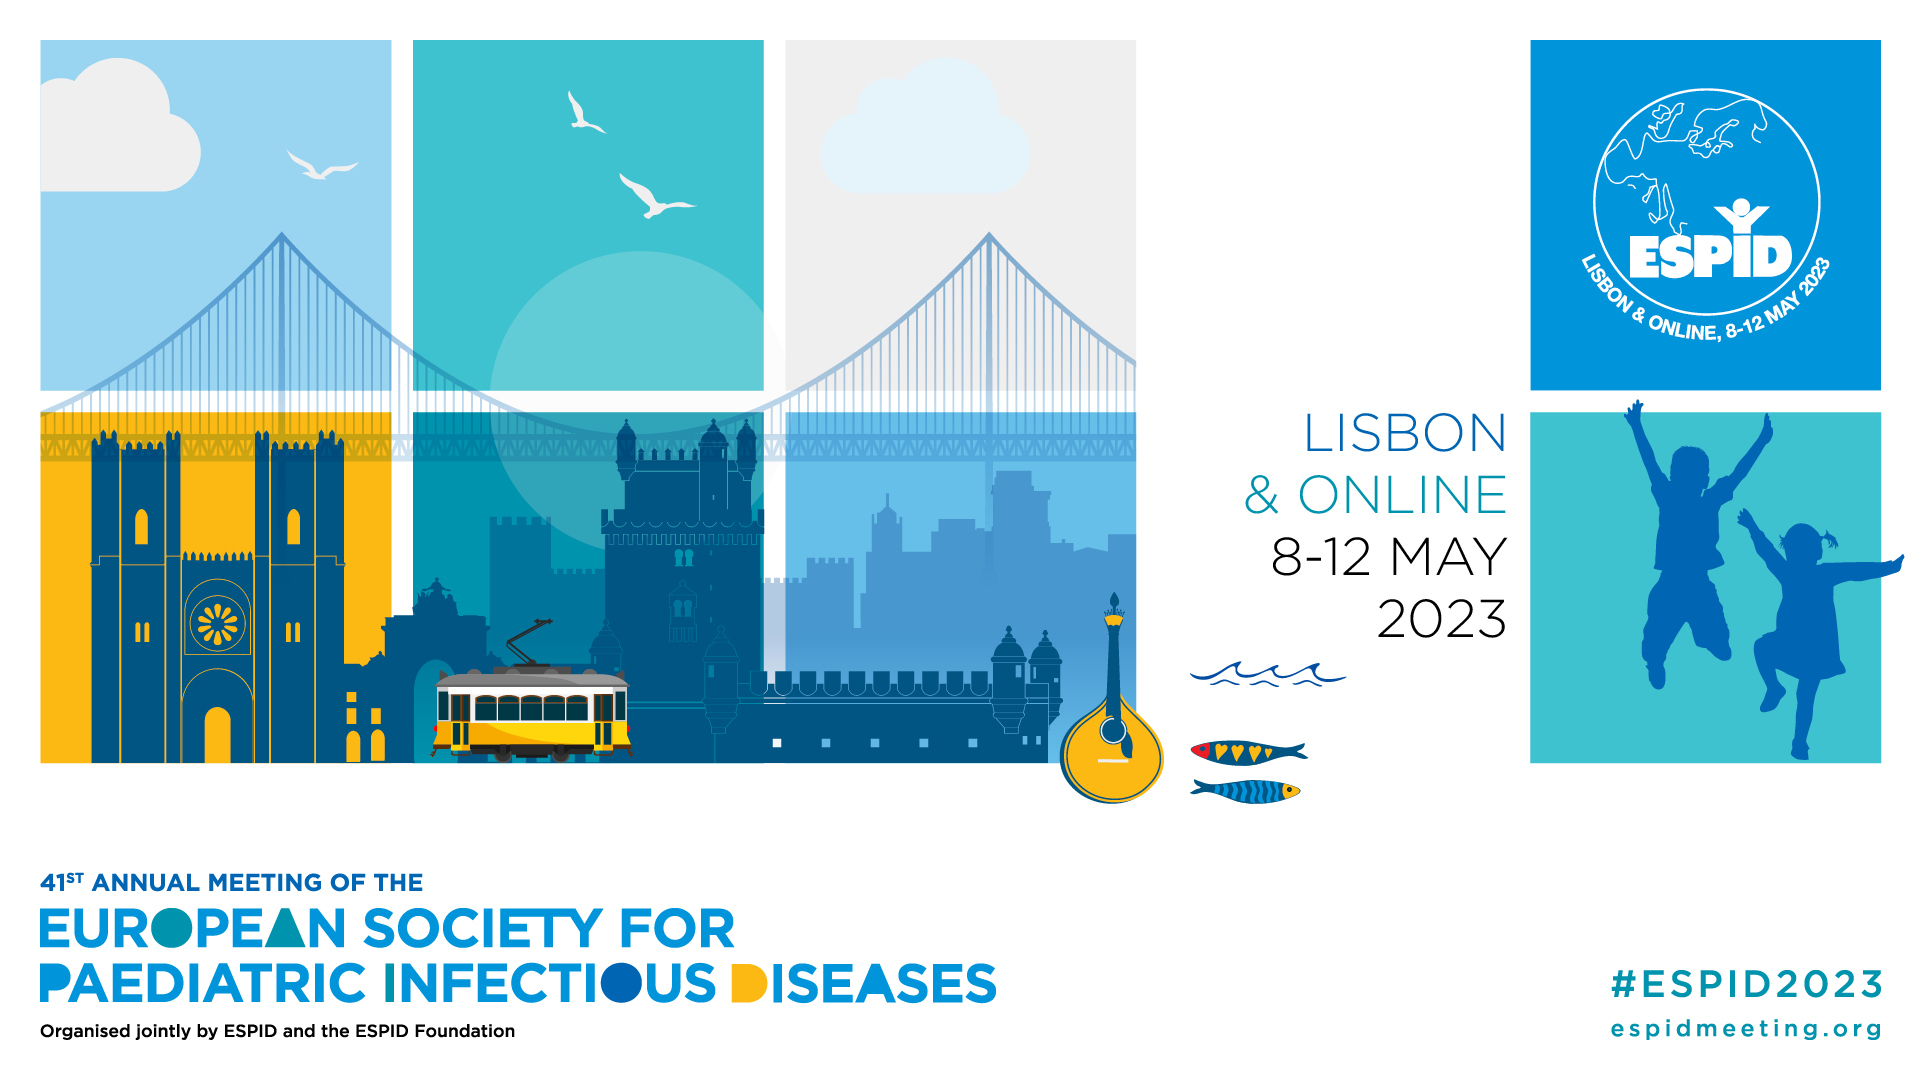 ESPID 2023 - 41st Annual Meeting of the European Society for Paediatric Infectious Diseases, Lisbon, Lisboa, Portugal